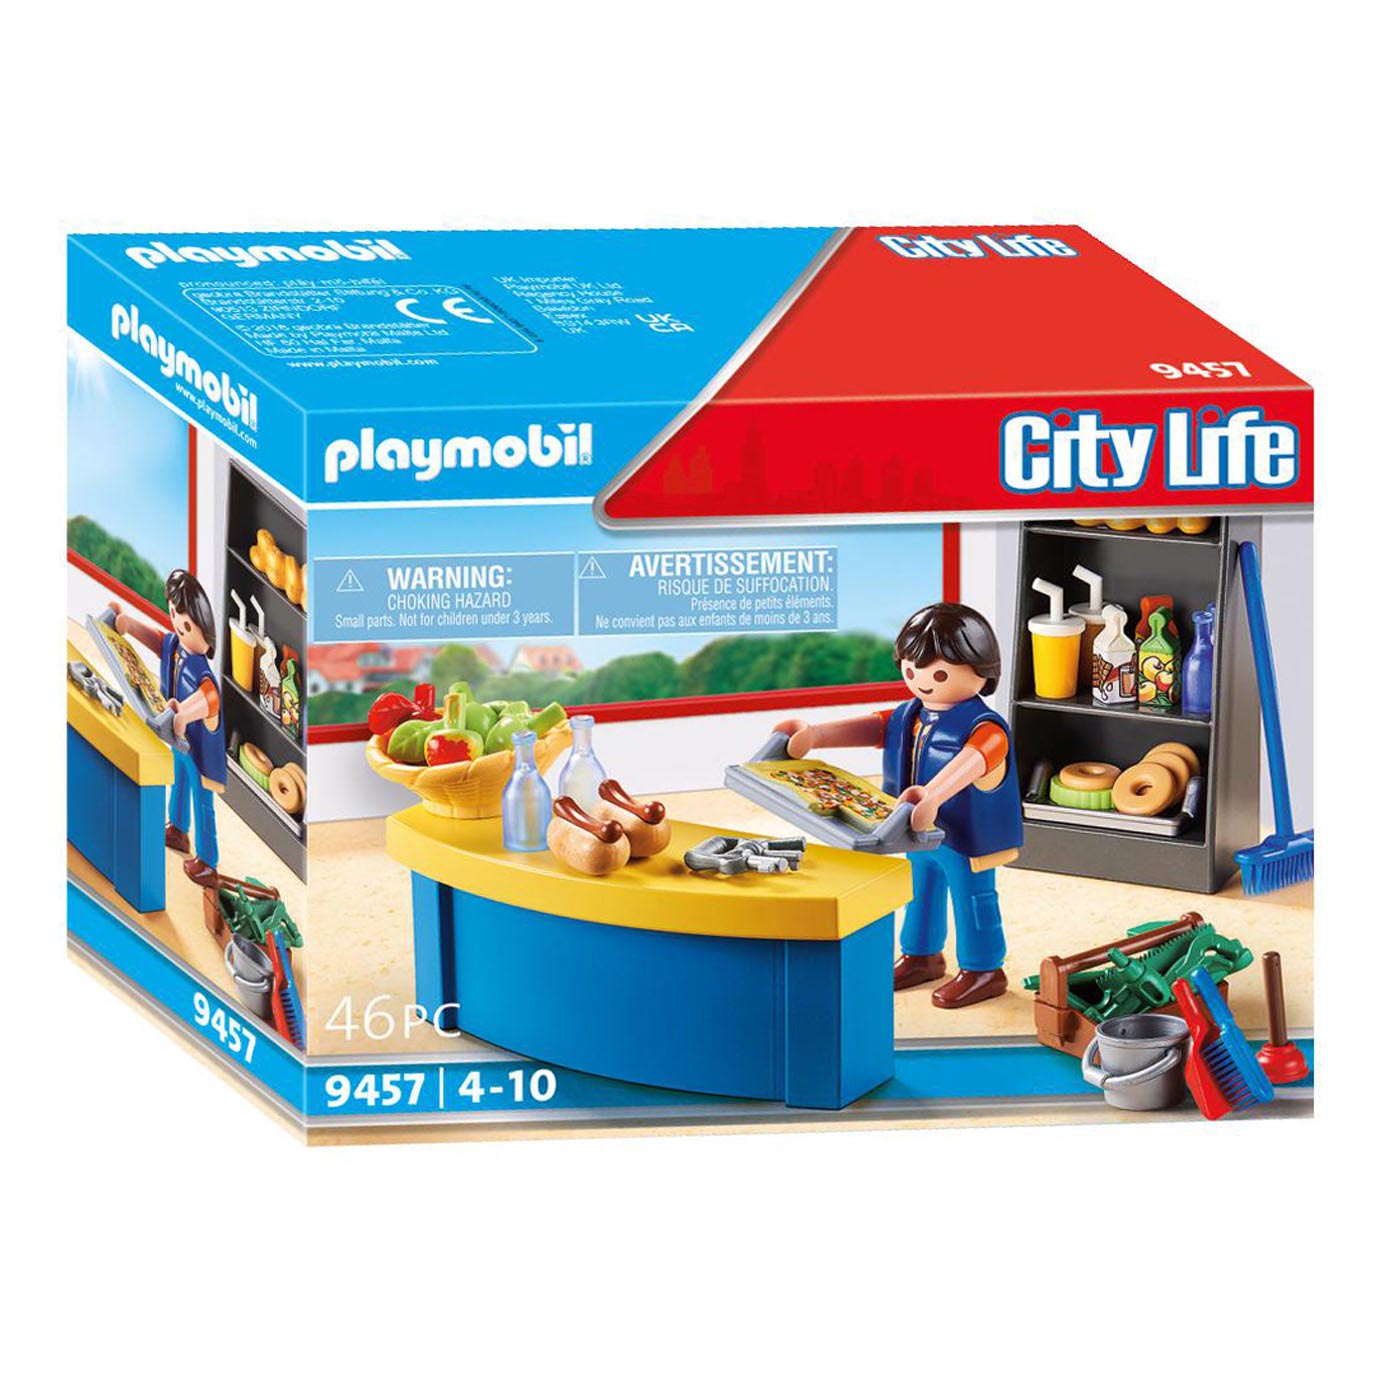 Playmobil City Life School Janitor with Kiosk - 9457